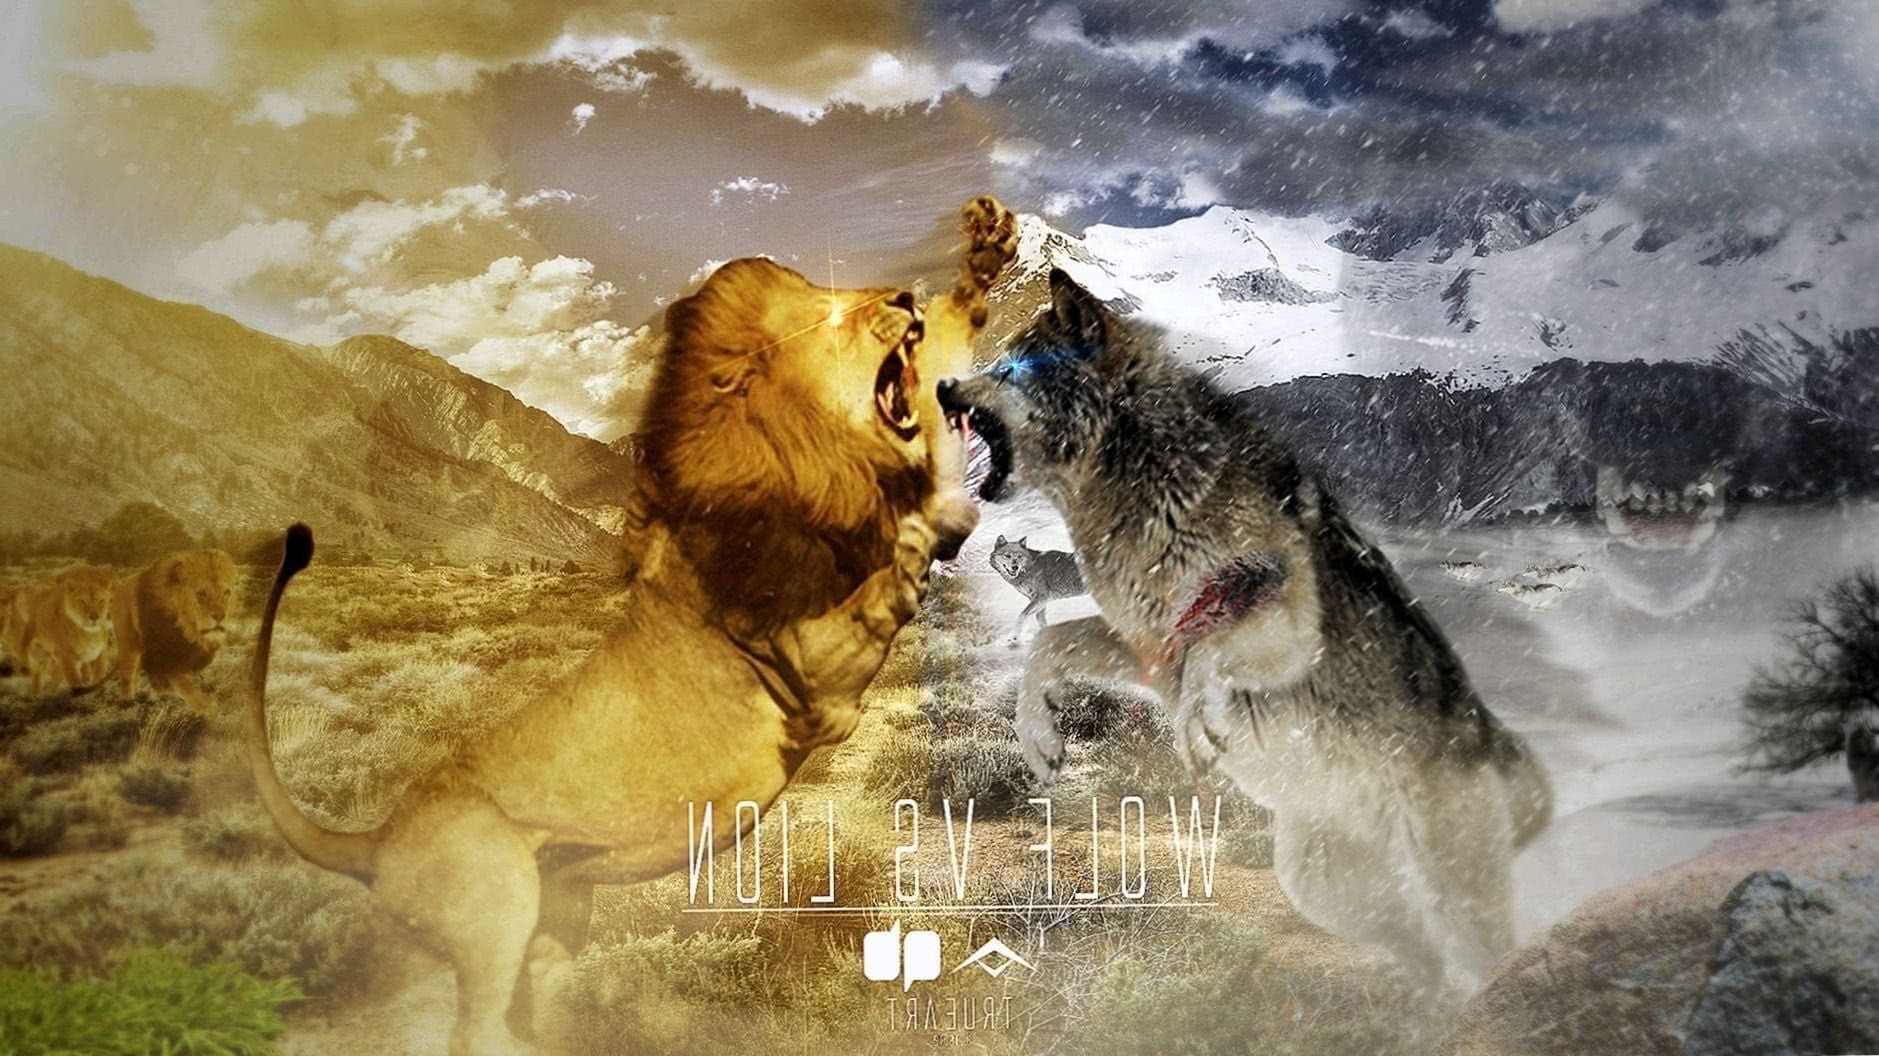 Wolf Vs Lion Wallpaper Image 1